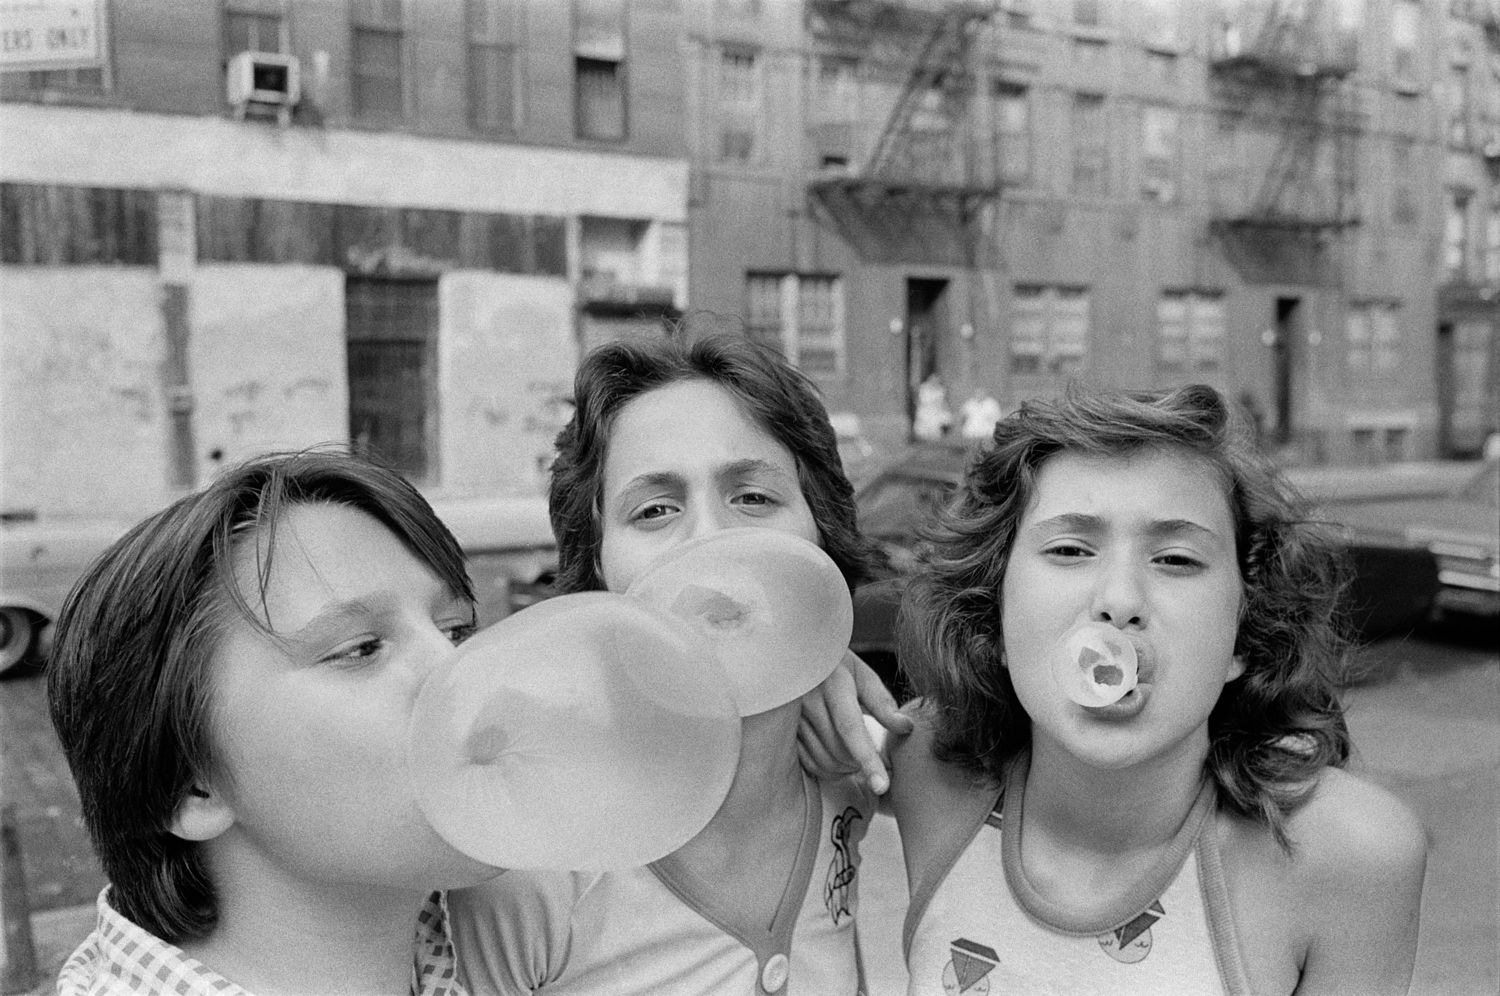 Carol, JoJo and Lisa hanging out on Broome Street, New York City, 1976 © Susan Meiselas / Magnum Photos 